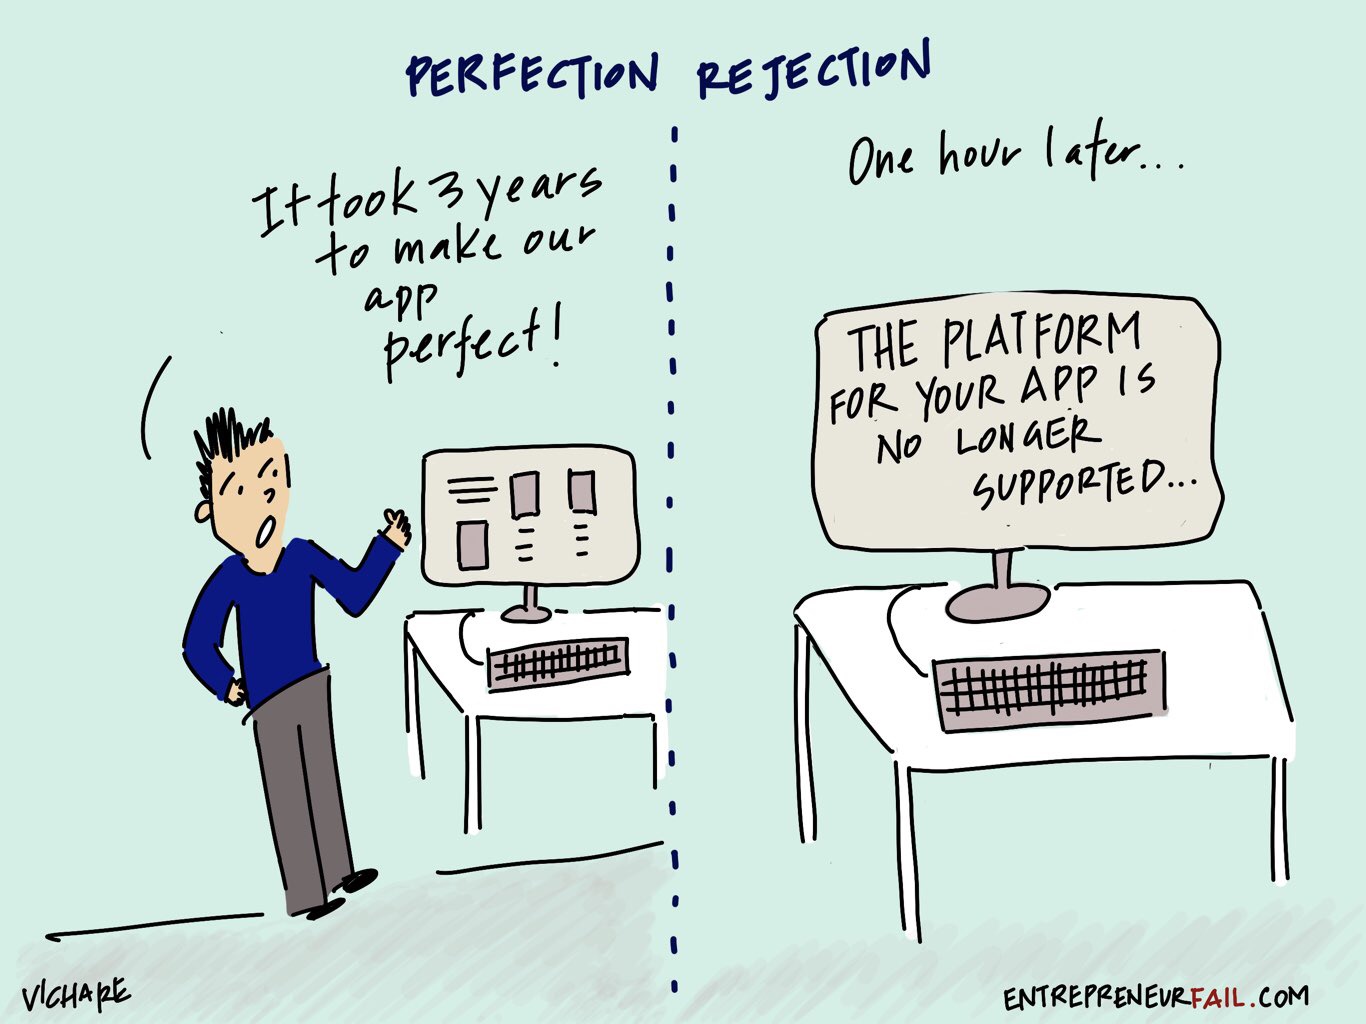 entrepreneurfail-perfection-rejection